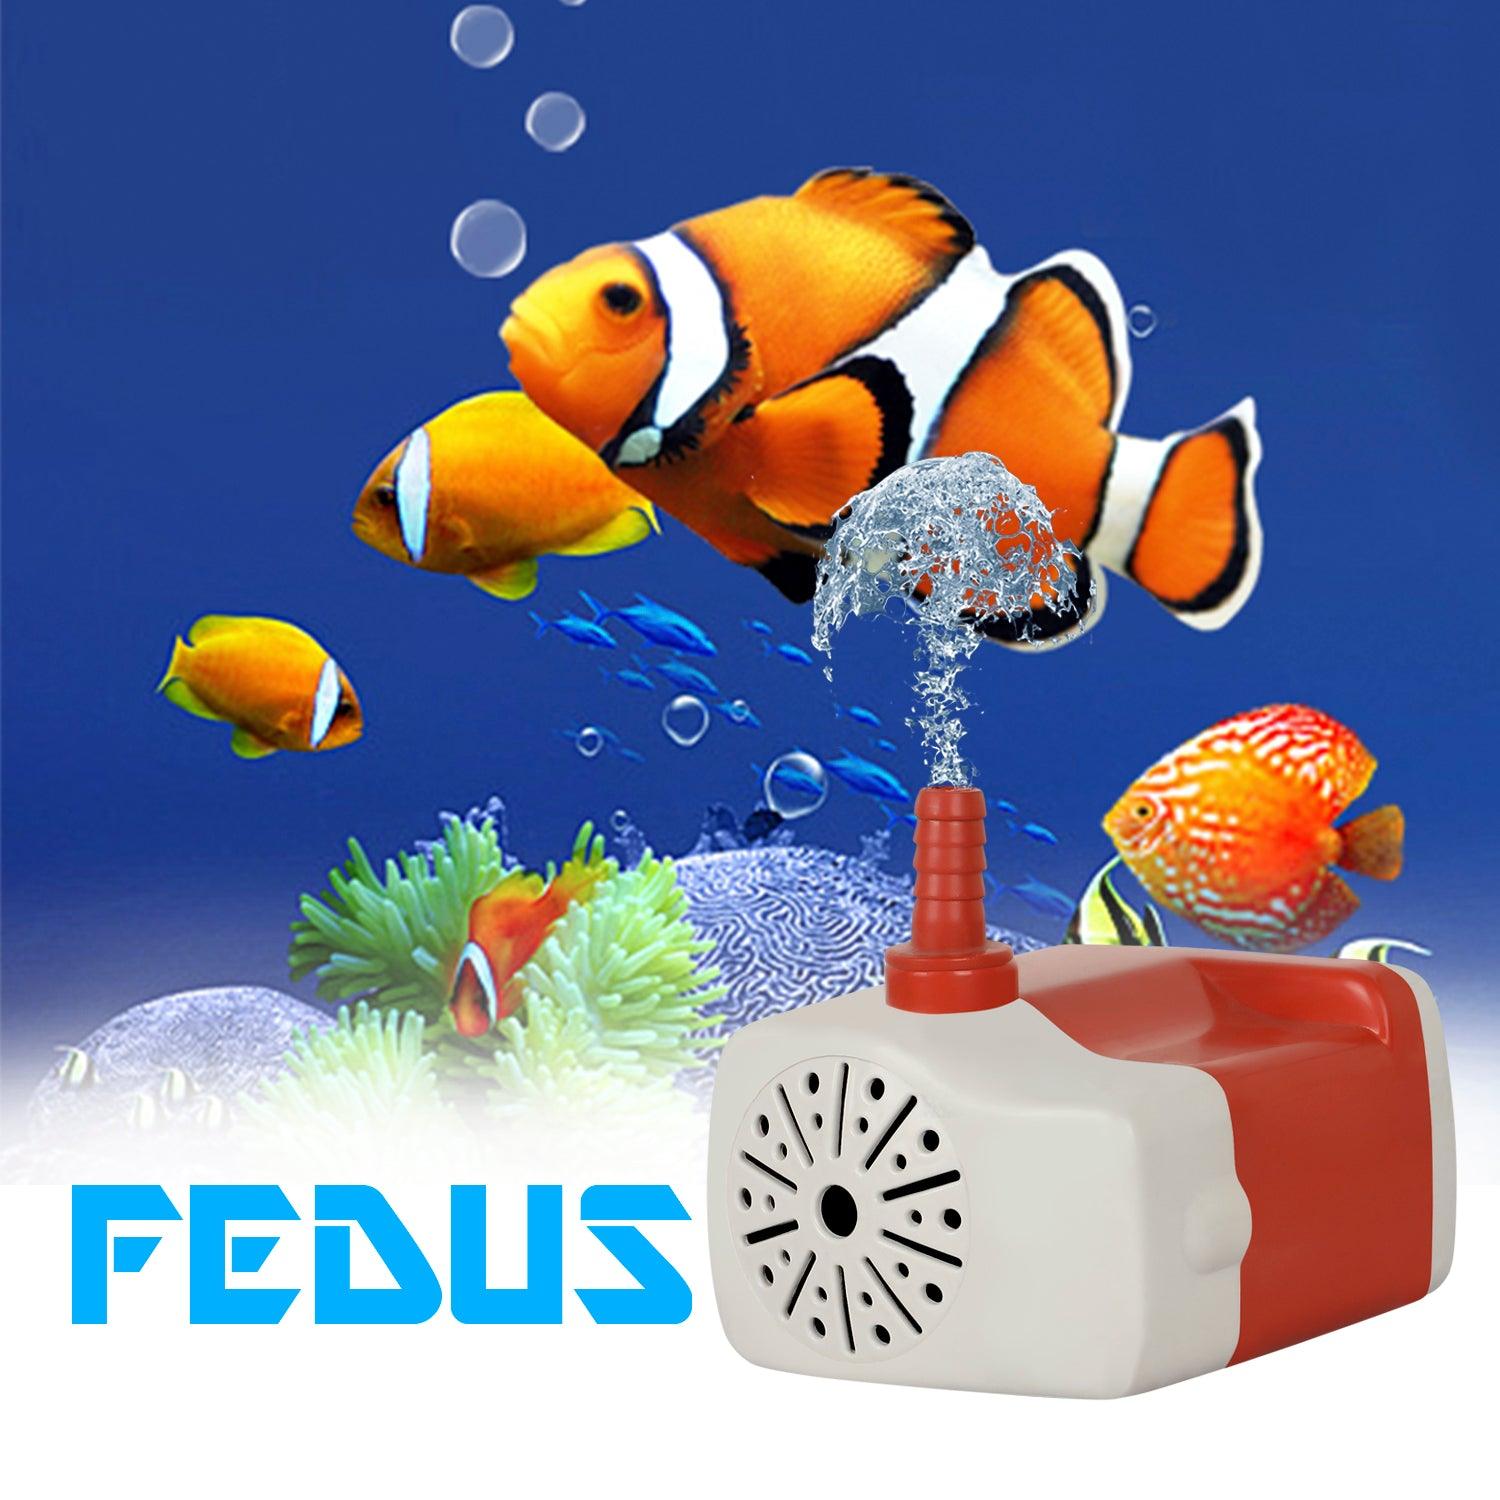 FEDUS 40 Watt Cooler Water Pump | Water Lifting Cooler Water Pump Motor, Cooler Pump Submersible, Aquarium Water Pump Motor, Pond Pump Submersible, Fountain Pump Motor Fountain Motor Small Pump - FEDUS